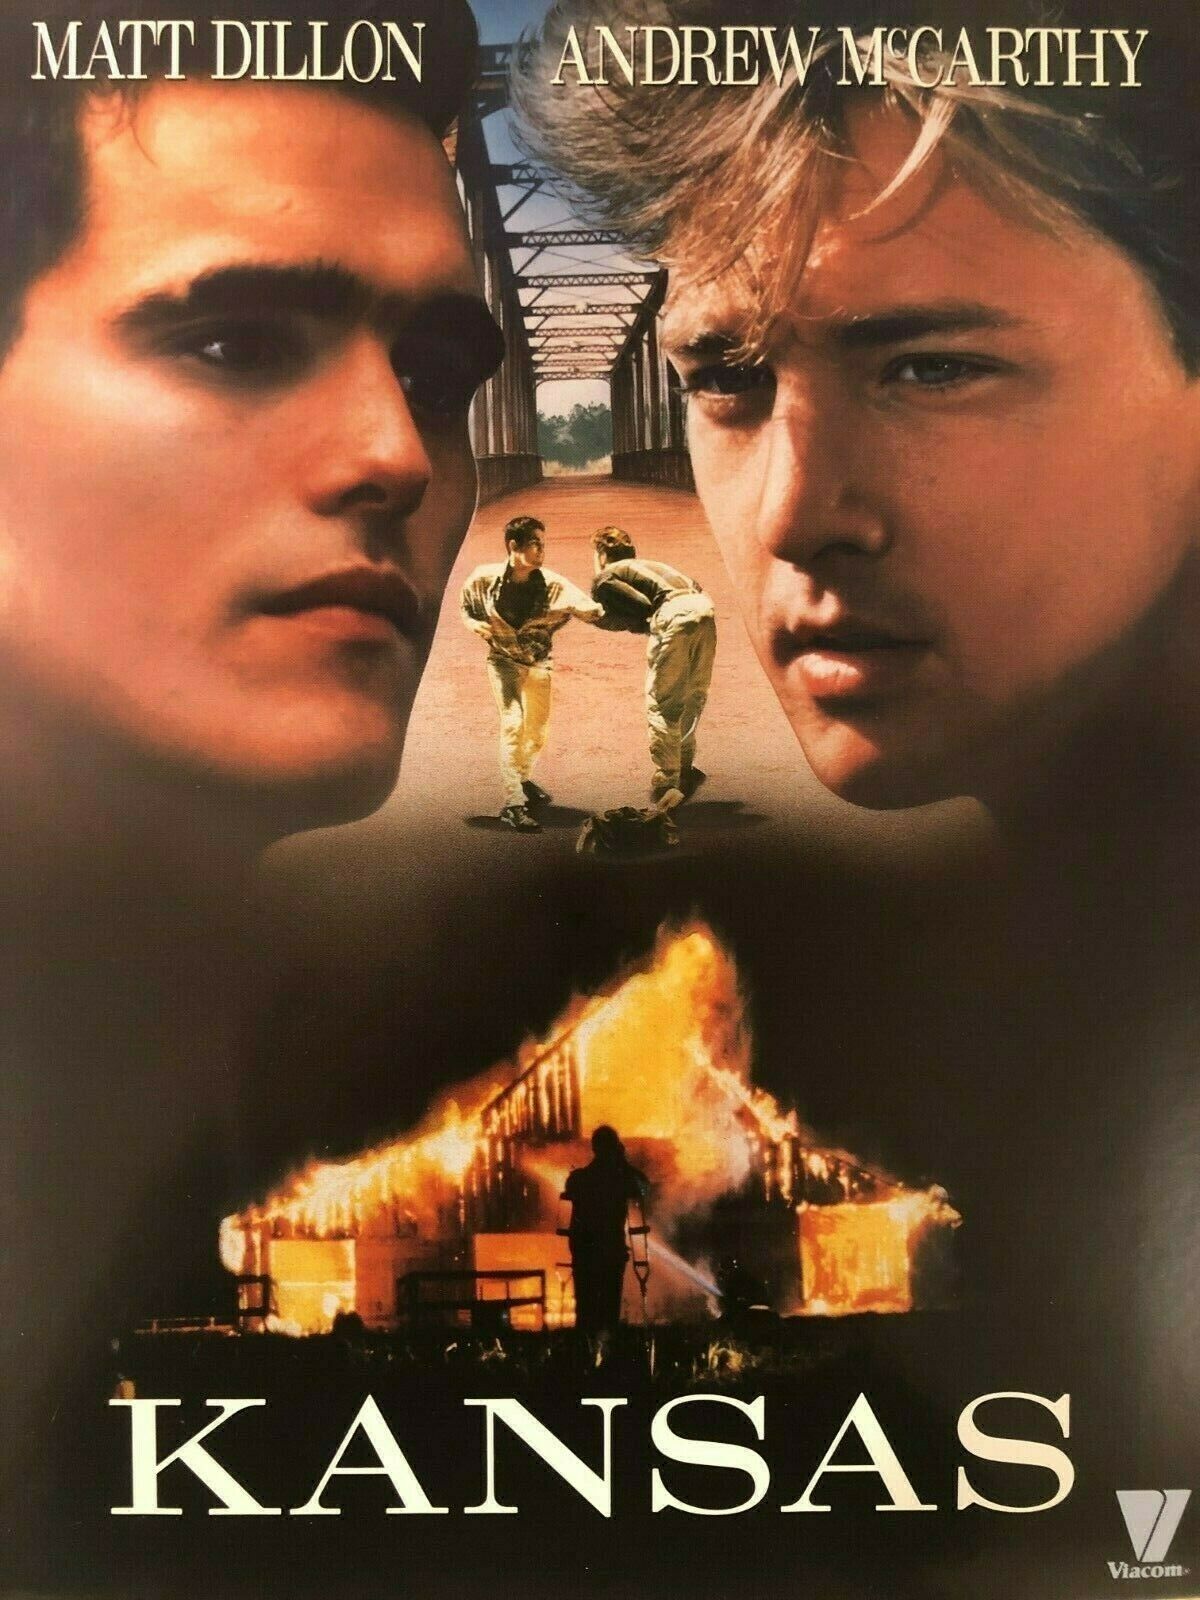 1988 Movie Press Kit - Kansas - Matt Dillon - Andrew Mccarthy - Photos - Poster